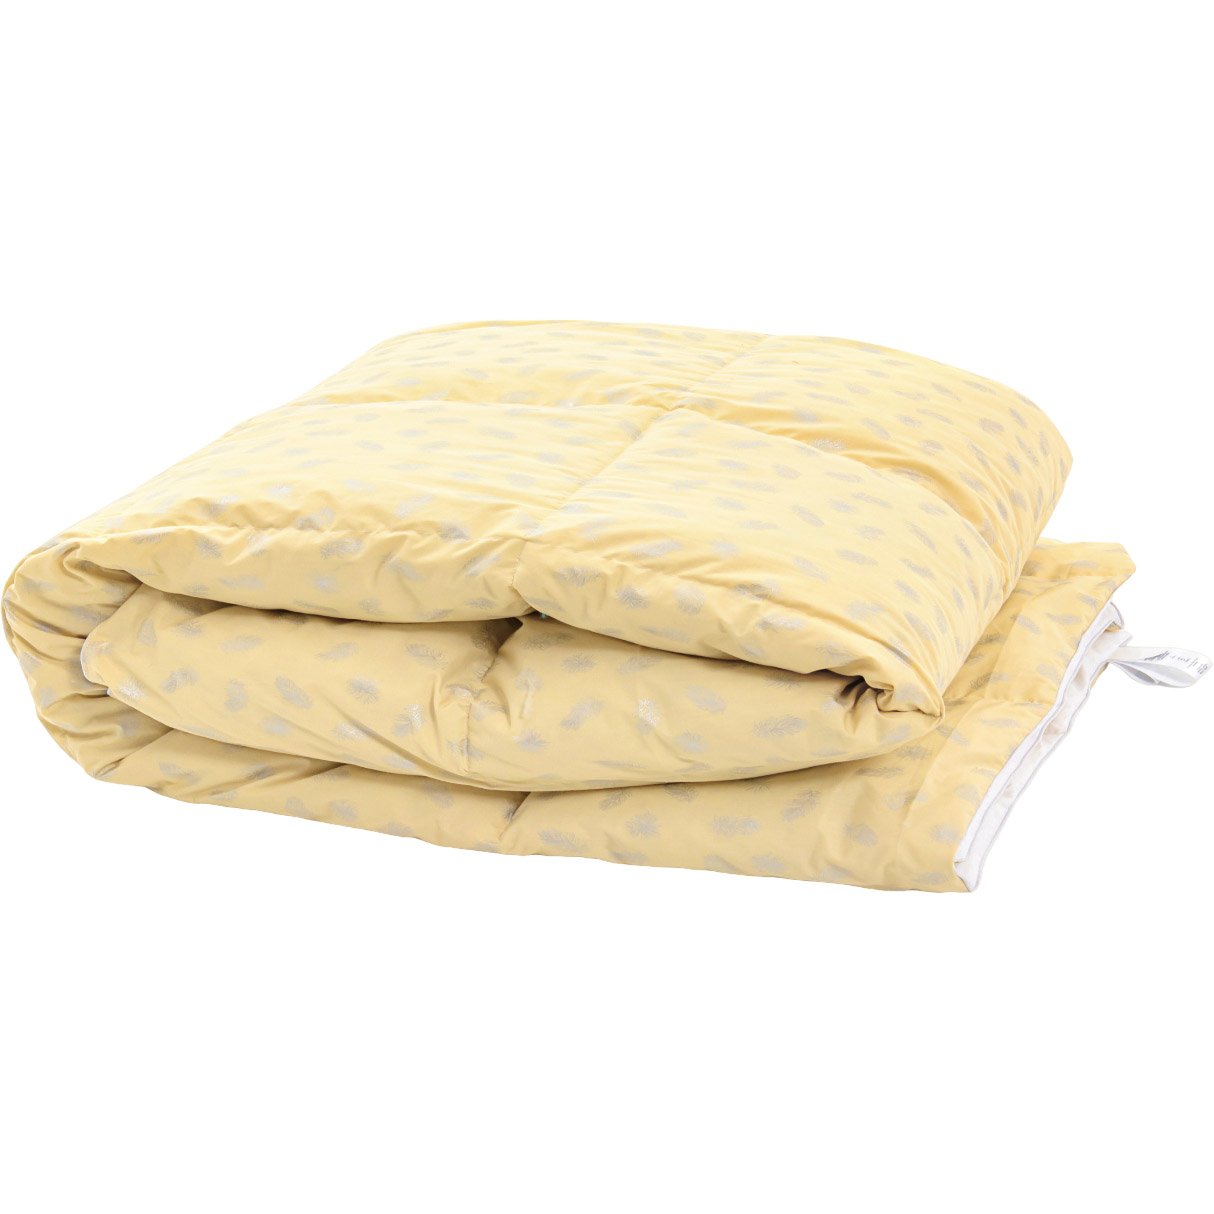 Одеяло пуховое MirSon Karmen №1833 Bio-Beige, 50% пух, полуторное, 205x140, бежевое (2200003013146) - фото 1